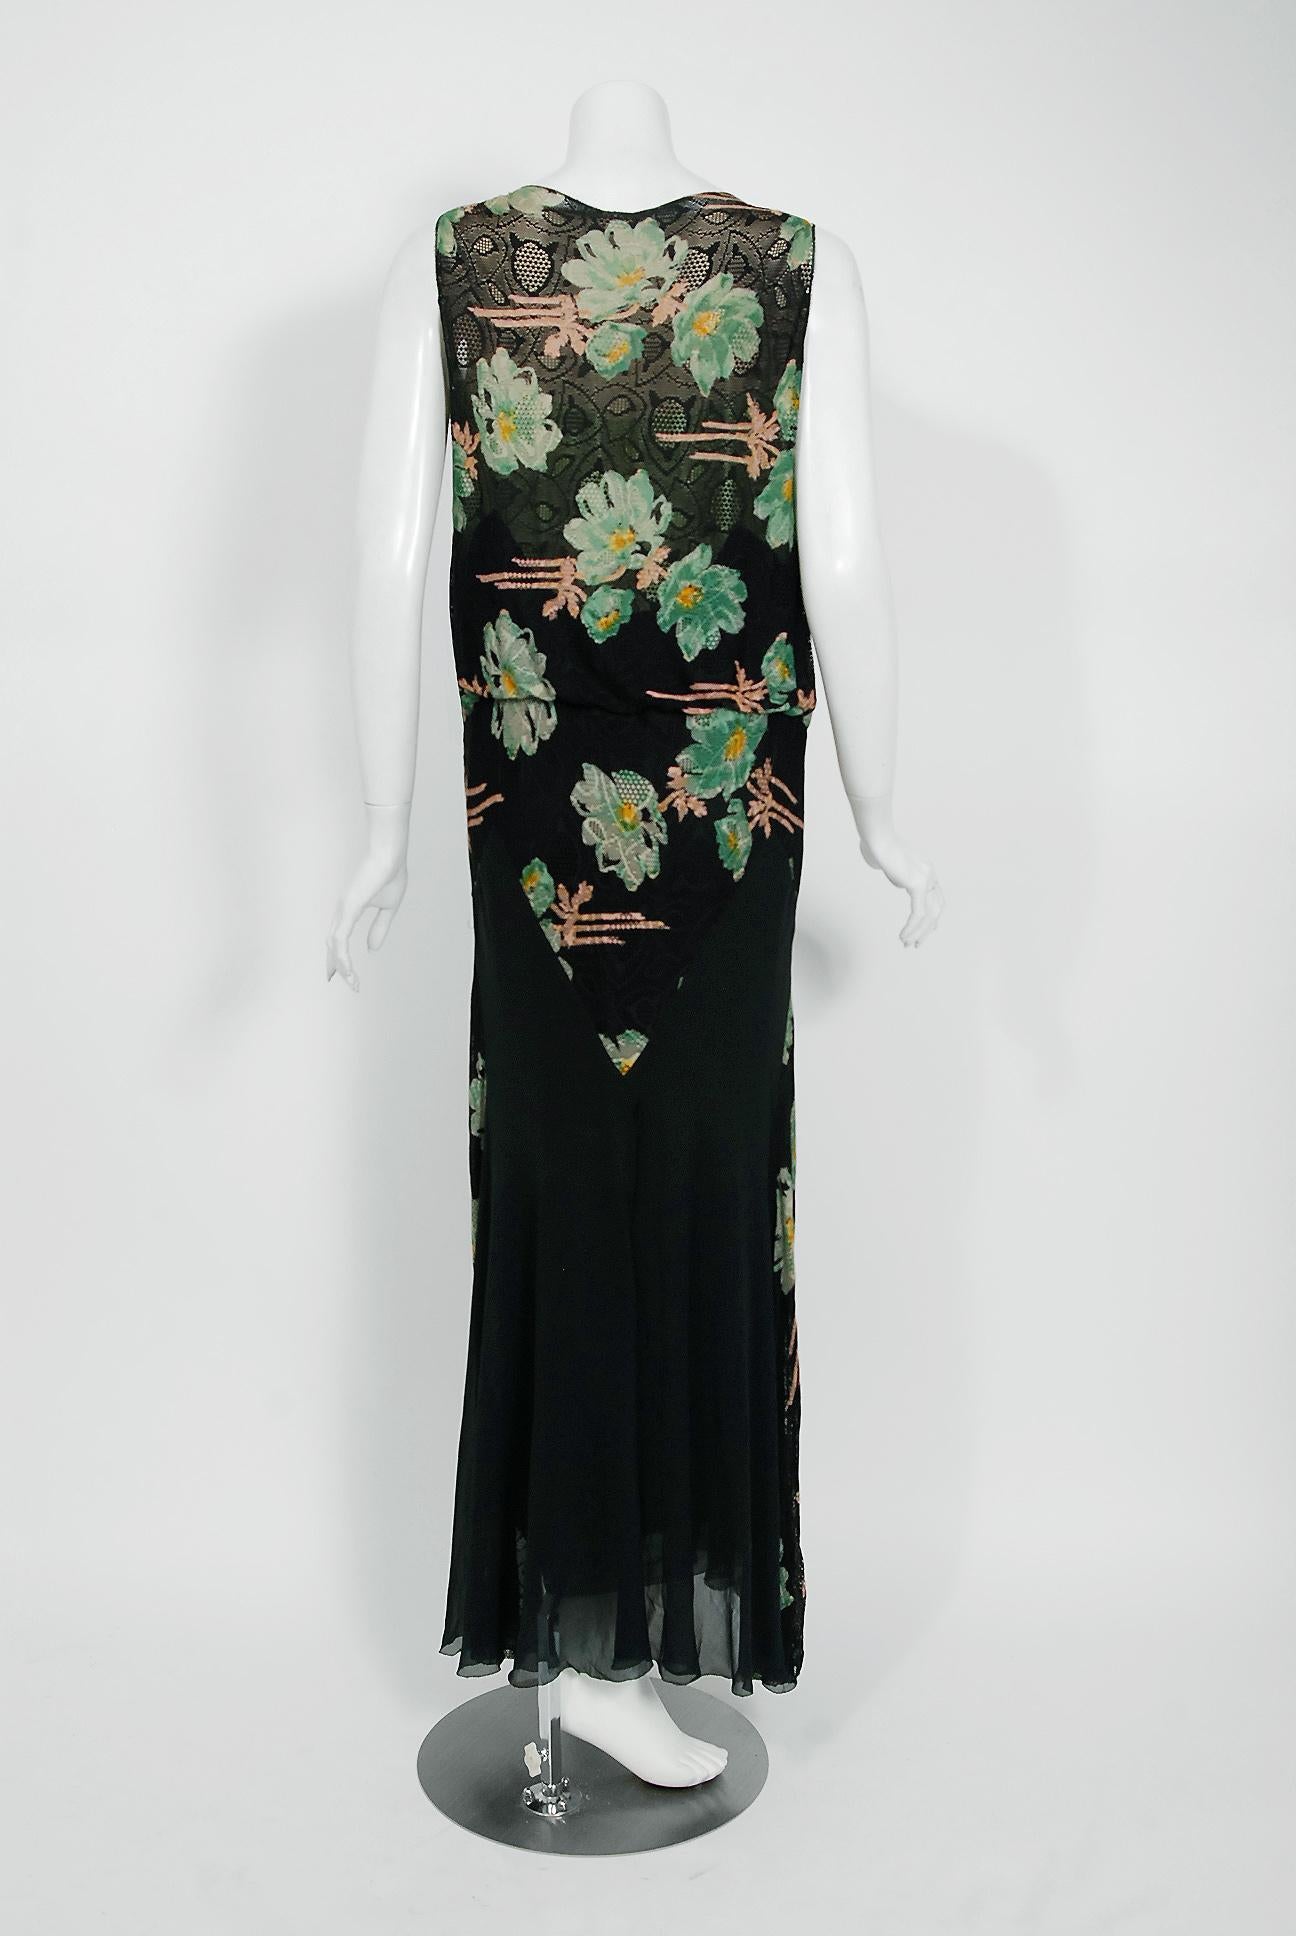 Vintage 1930's Green Black Floral Sheer Lace & Chiffon Bias-Cut Gown w/ Jacket 3